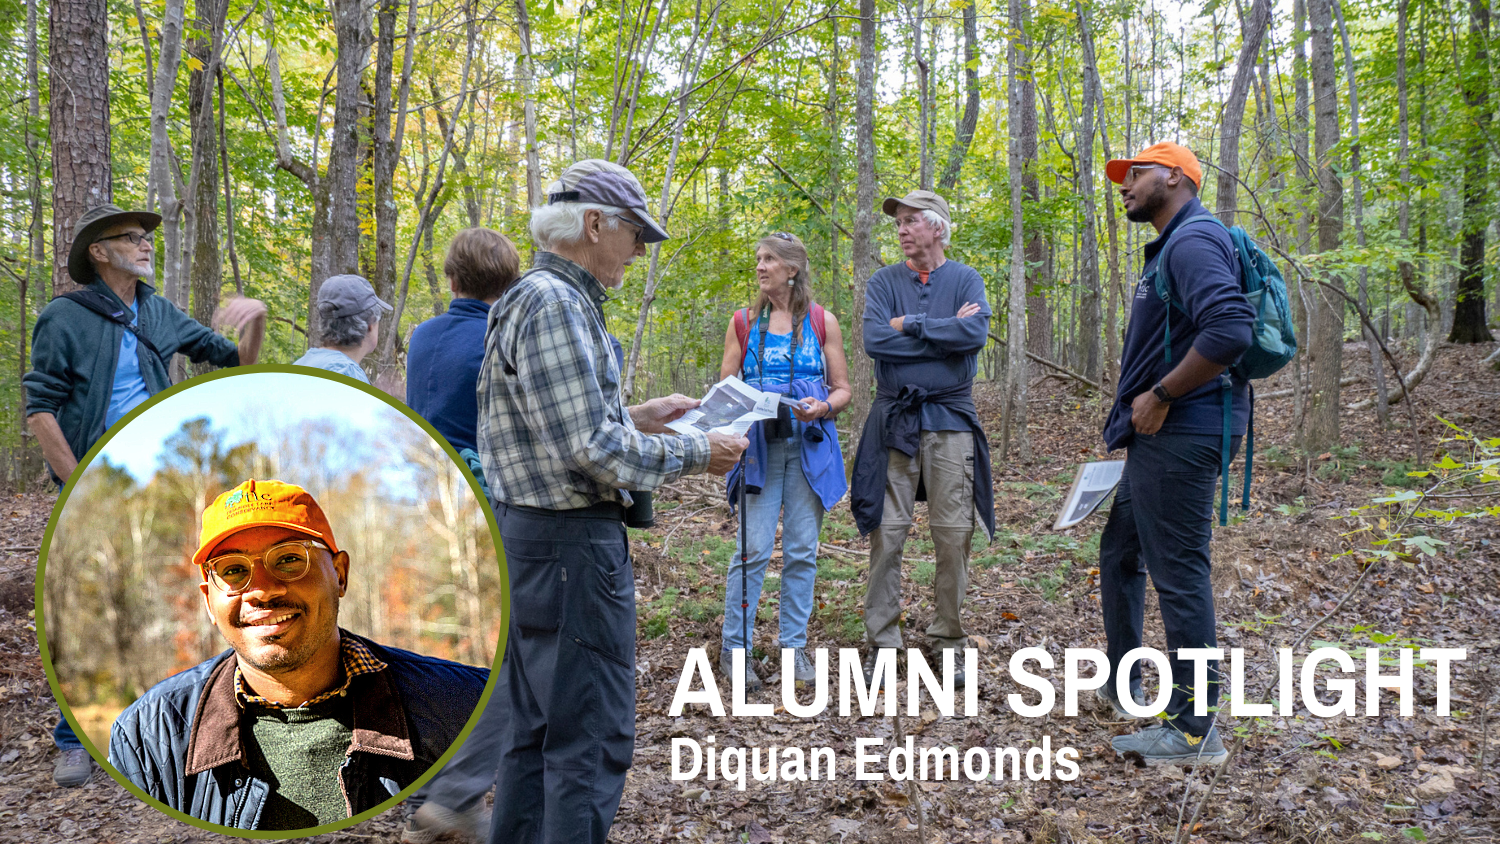 Diquan Edmonds - Alumni Spotlight: Diquan Edmonds Continues Mission to Make Outdoors Accessible for All - Parks Recreation and Tourism Management NC State University